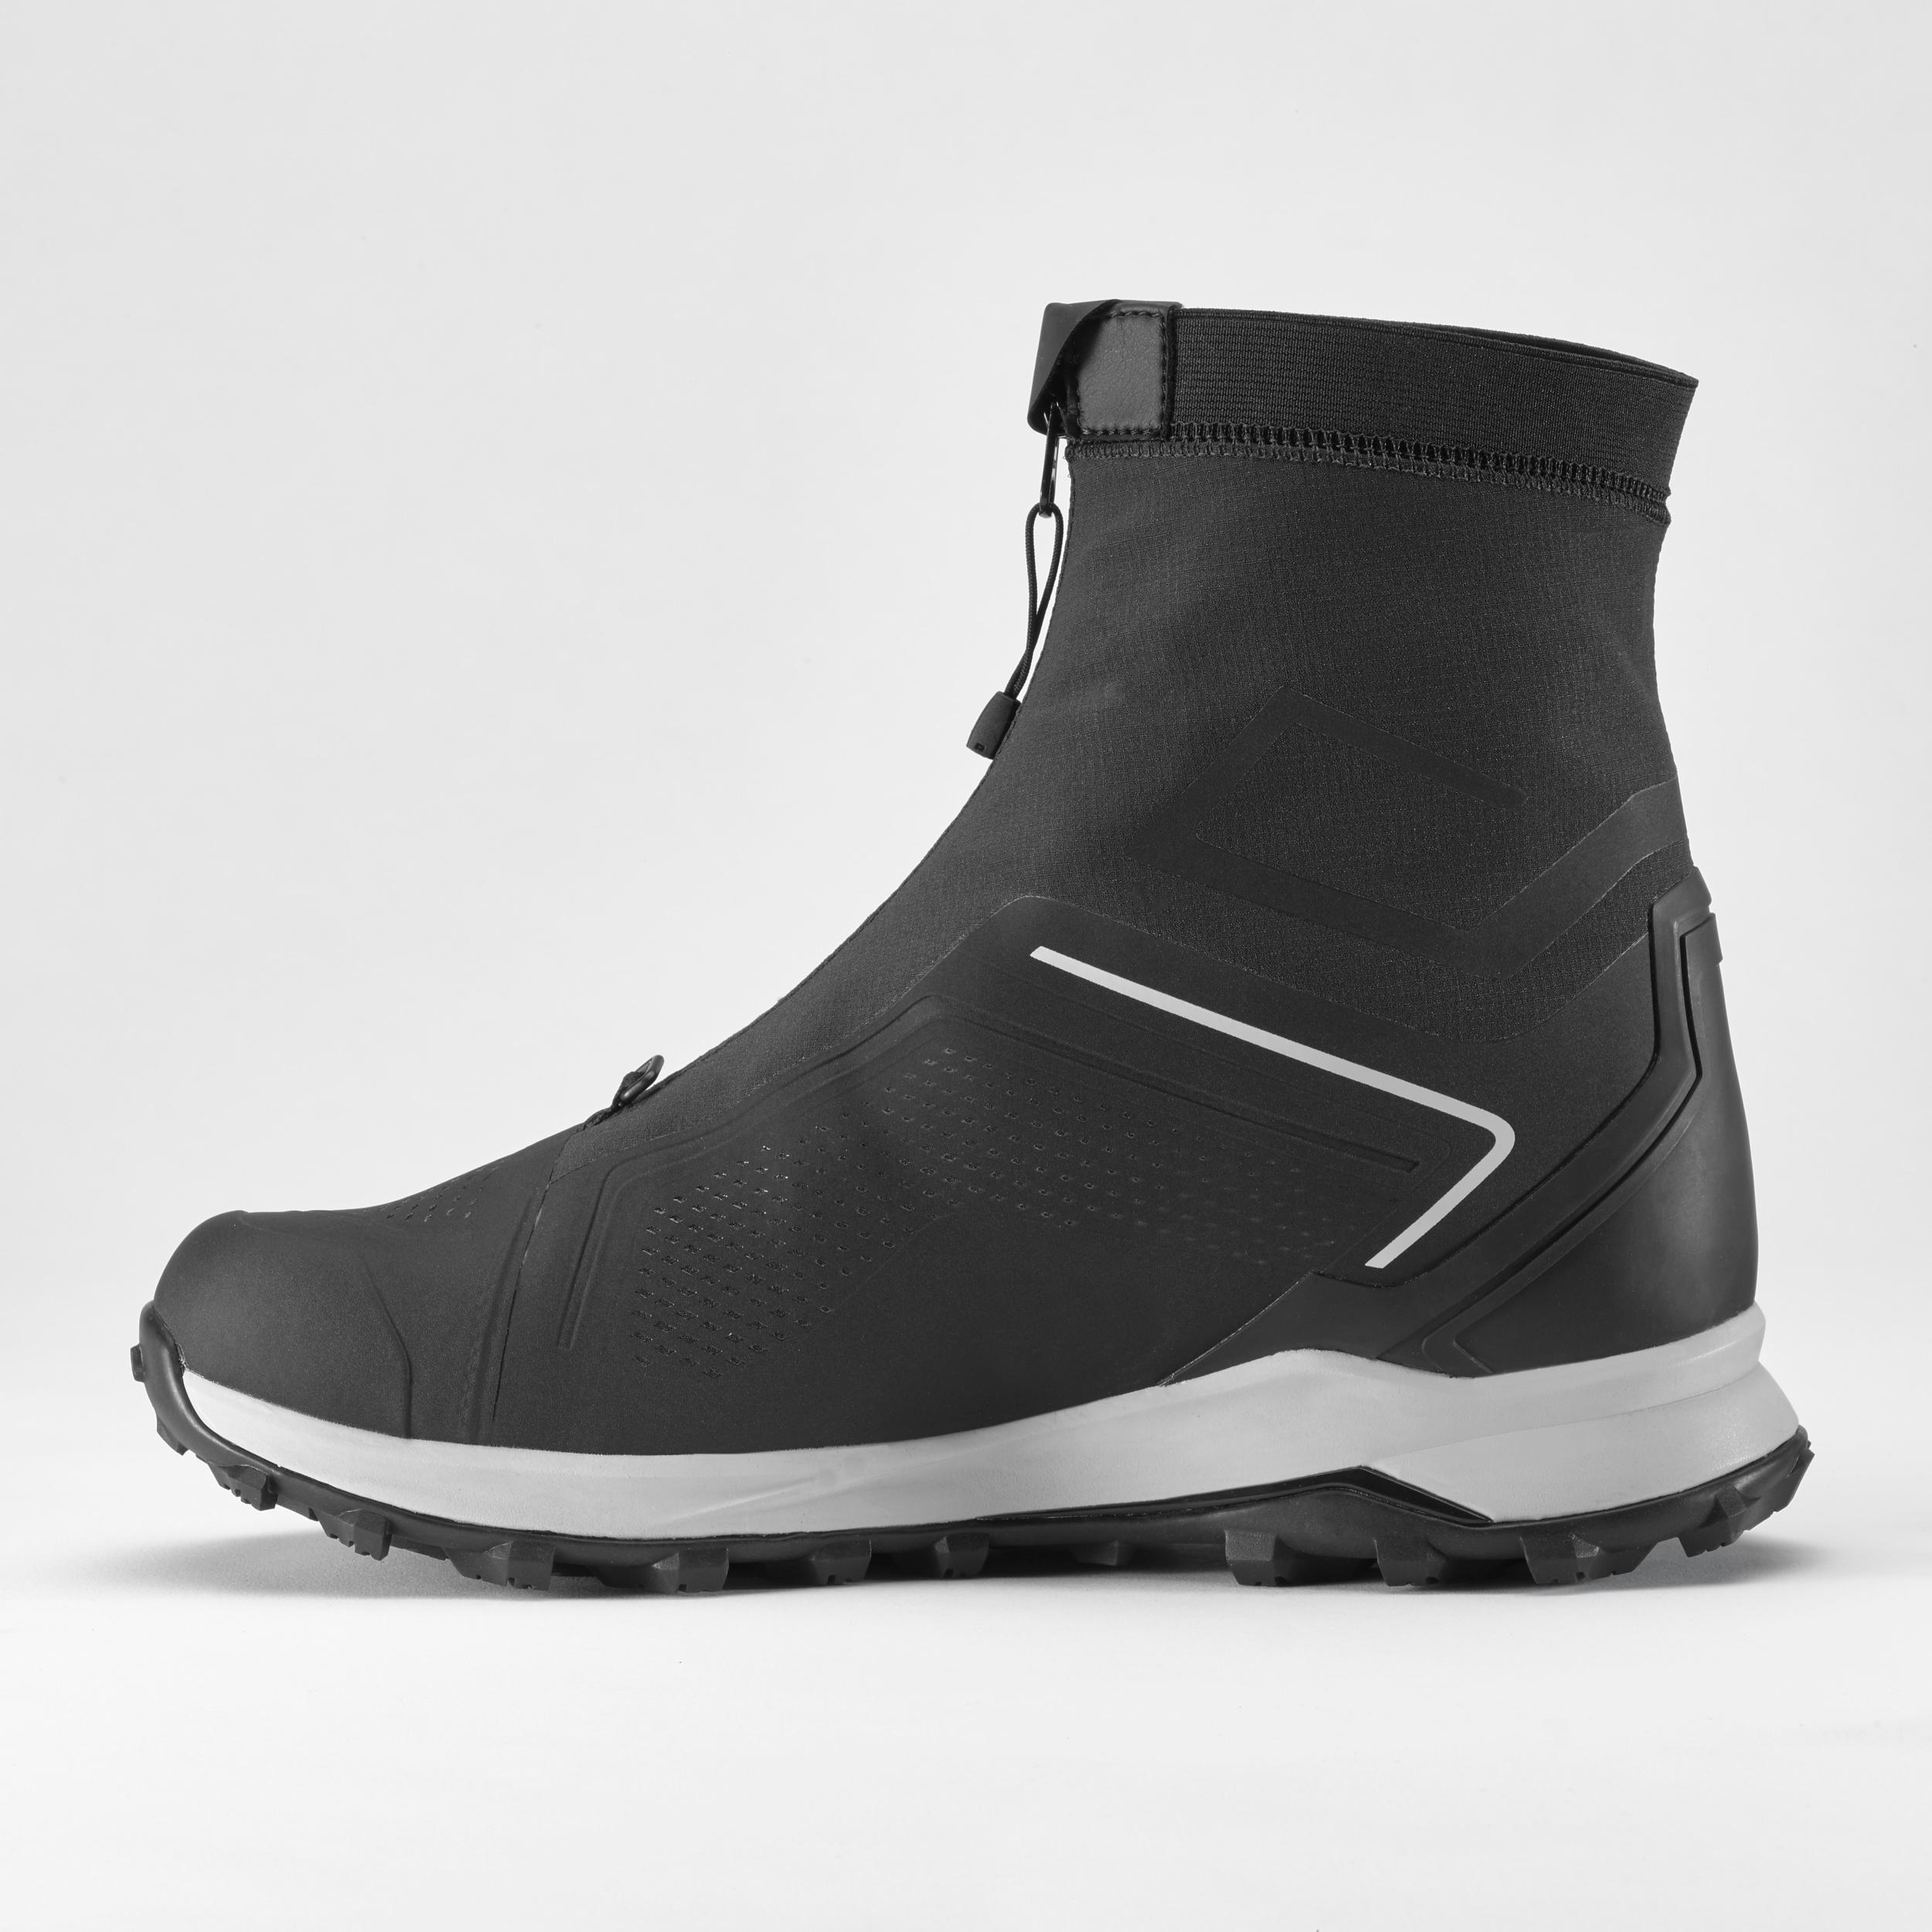 Men’s warm and waterproof hiking boots - SH900 PRO MOUNTAIN   3/7